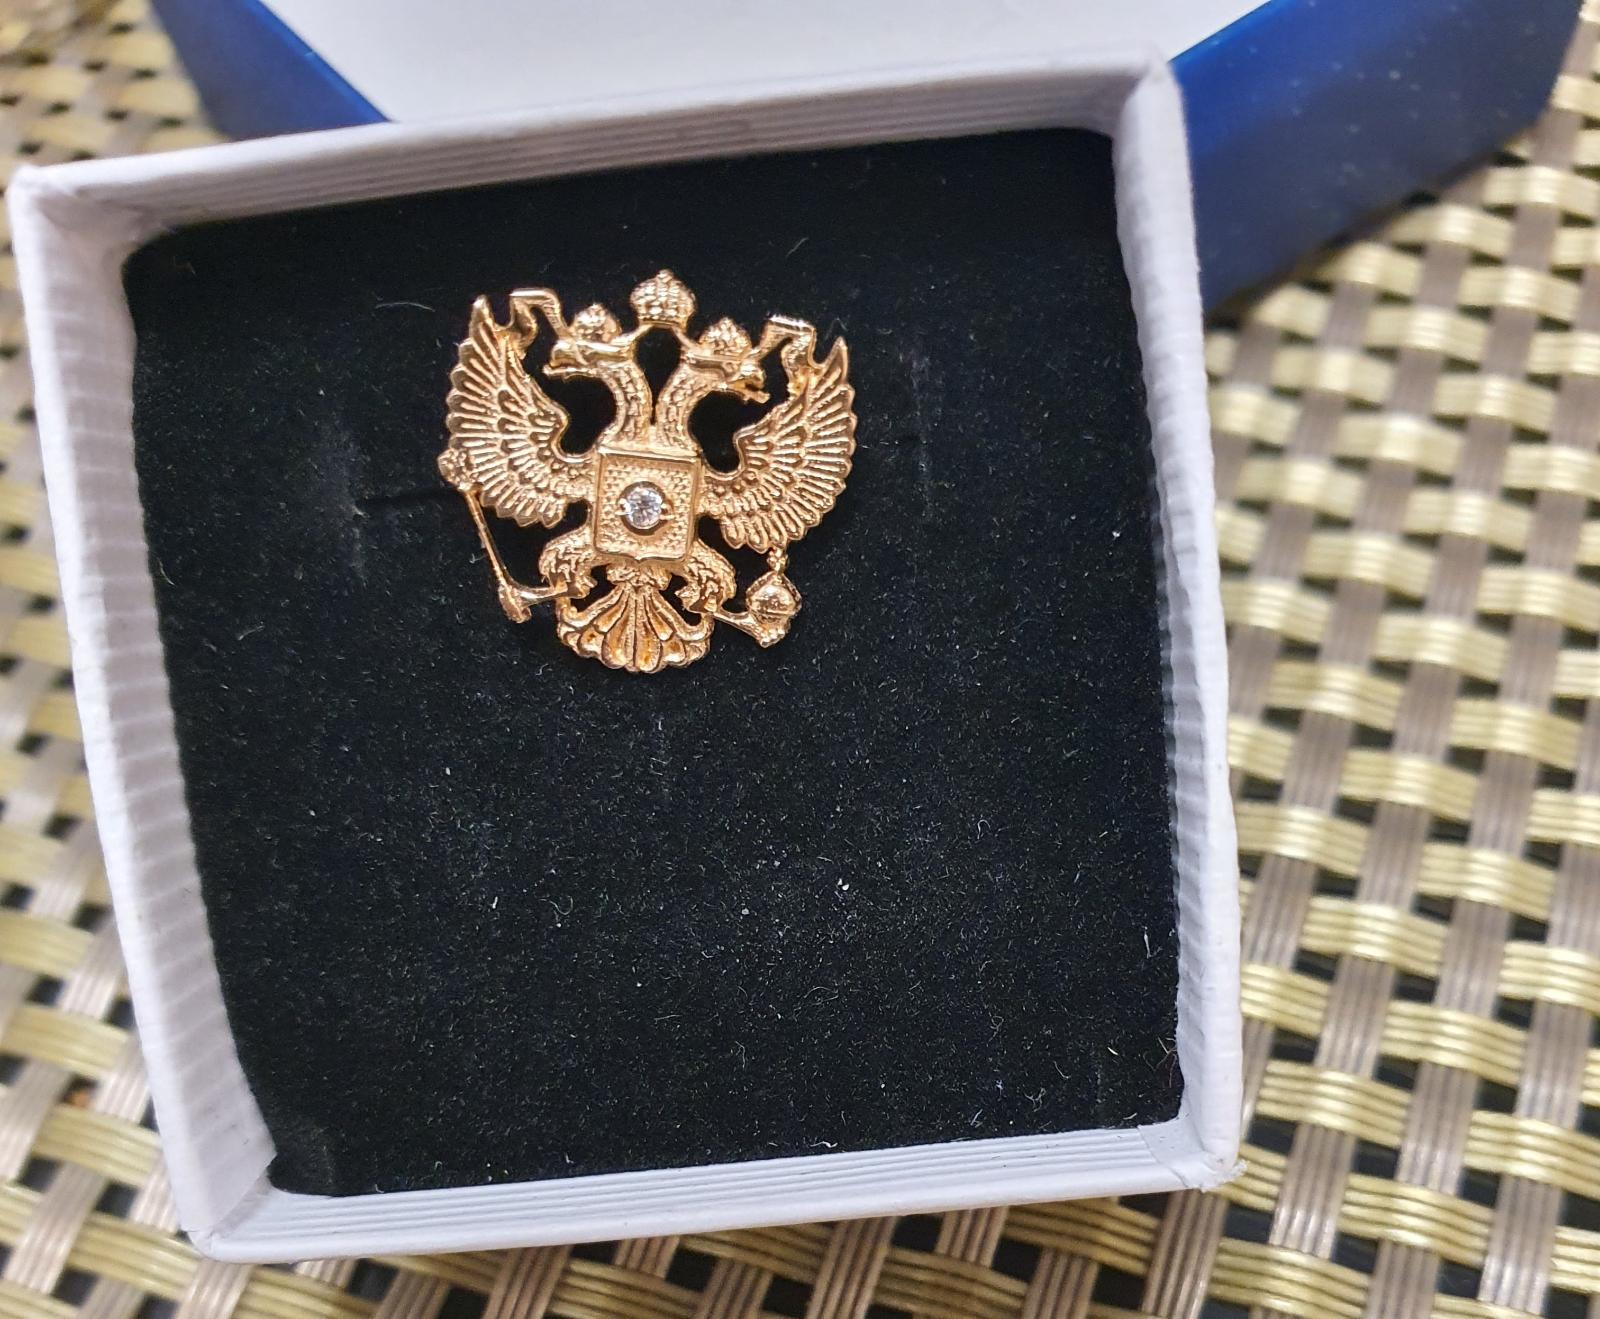 Zlaty odznak 585 dvojhlava orlice Rusko - Starožitné šperky